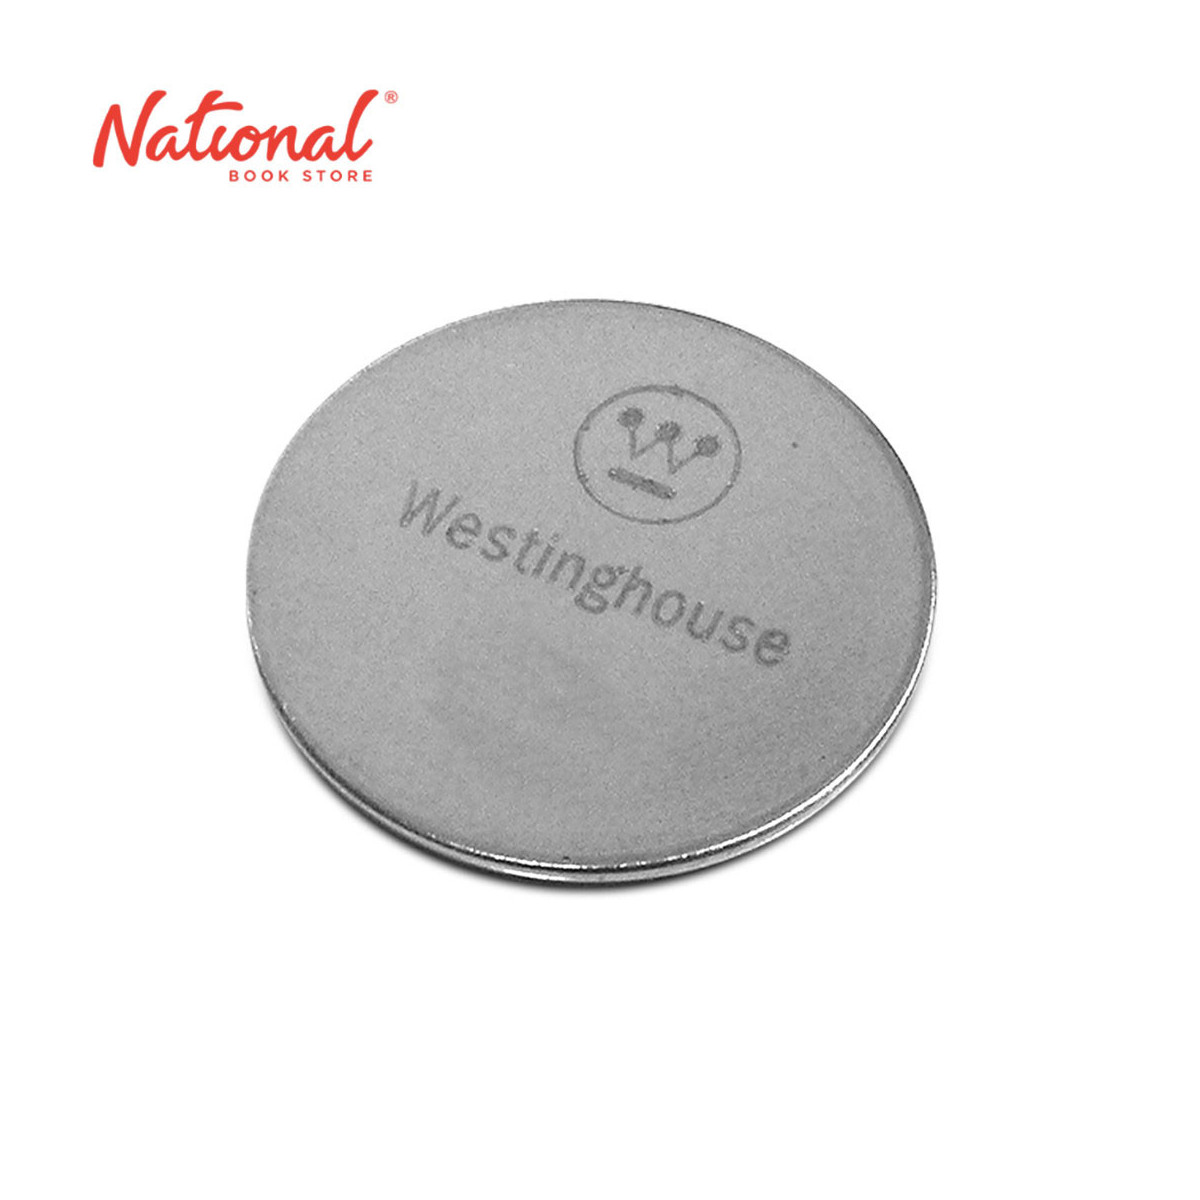 Westinghouse Battery Button LR66 (AG4-BP2) 2 pieces per pack - Office Supplies